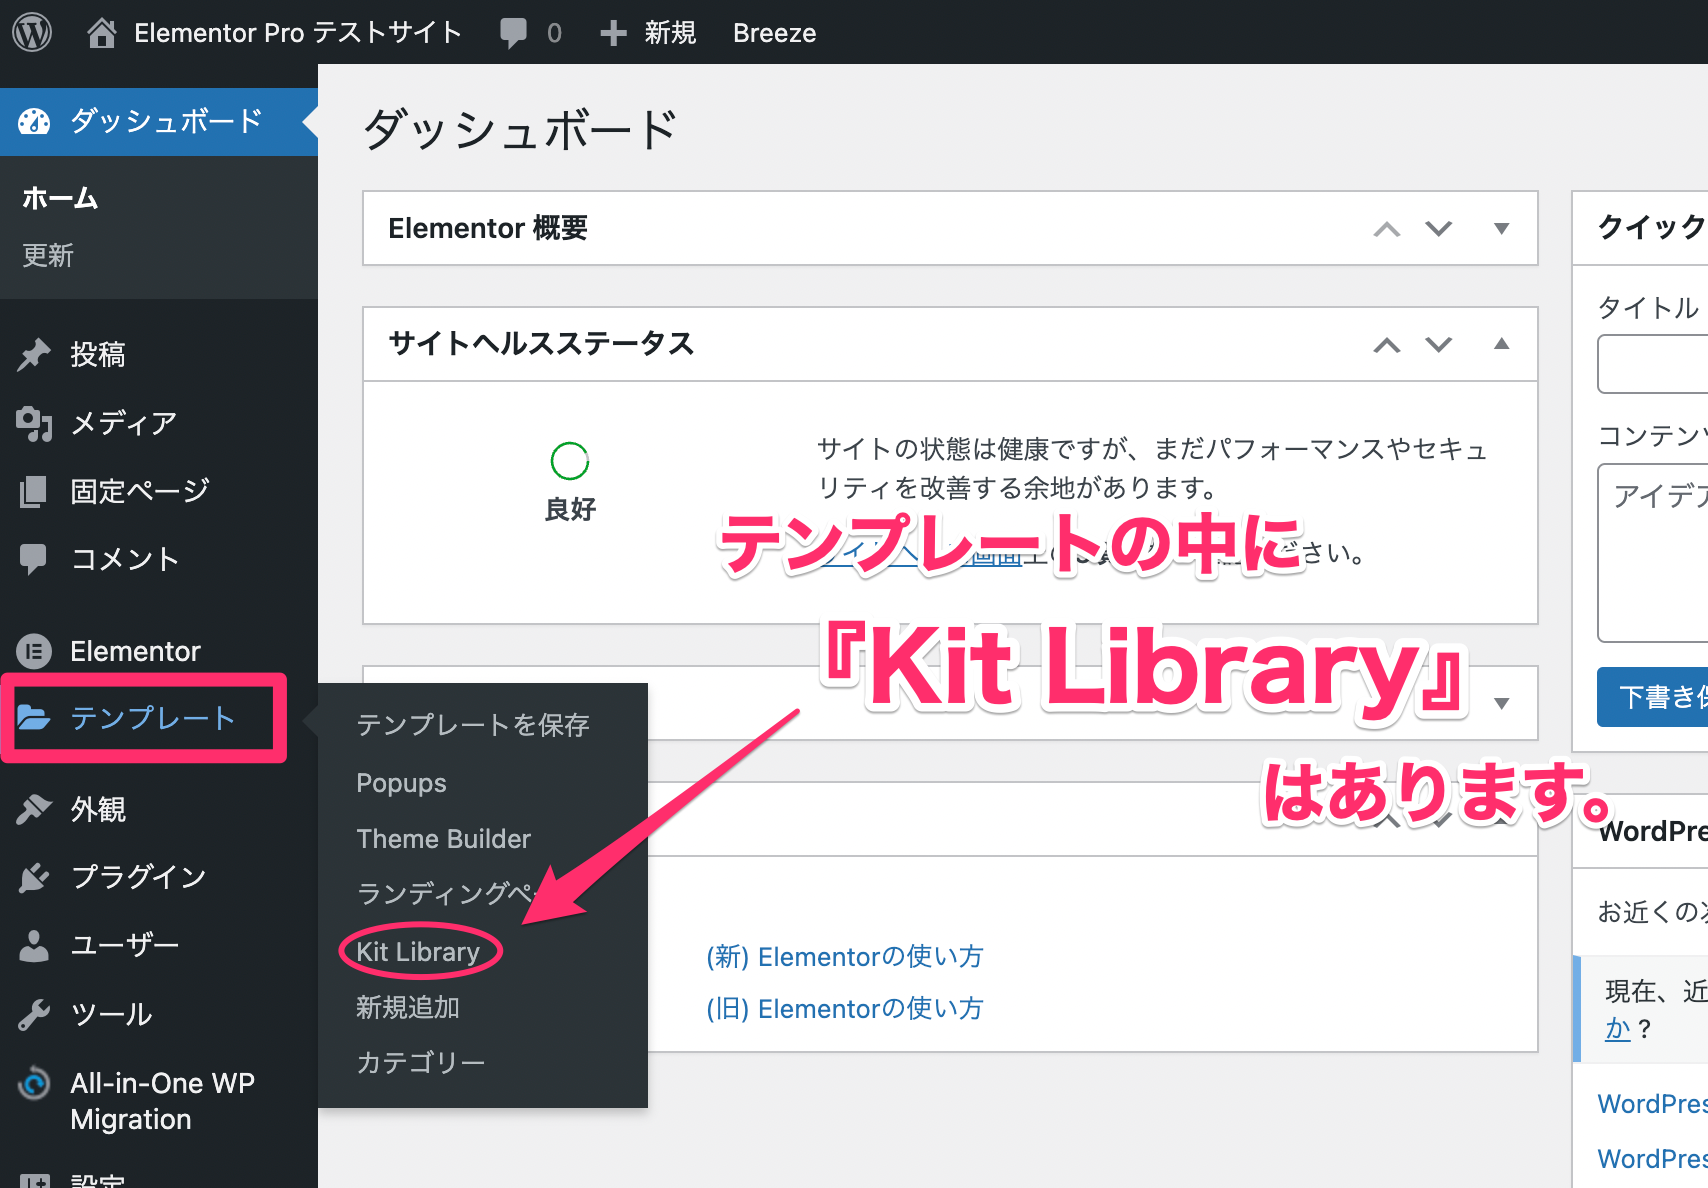 Kit Libraryリスト一覧画面に行く方法・ダッシュボードのテンプレート内の『kit Library』をクリック